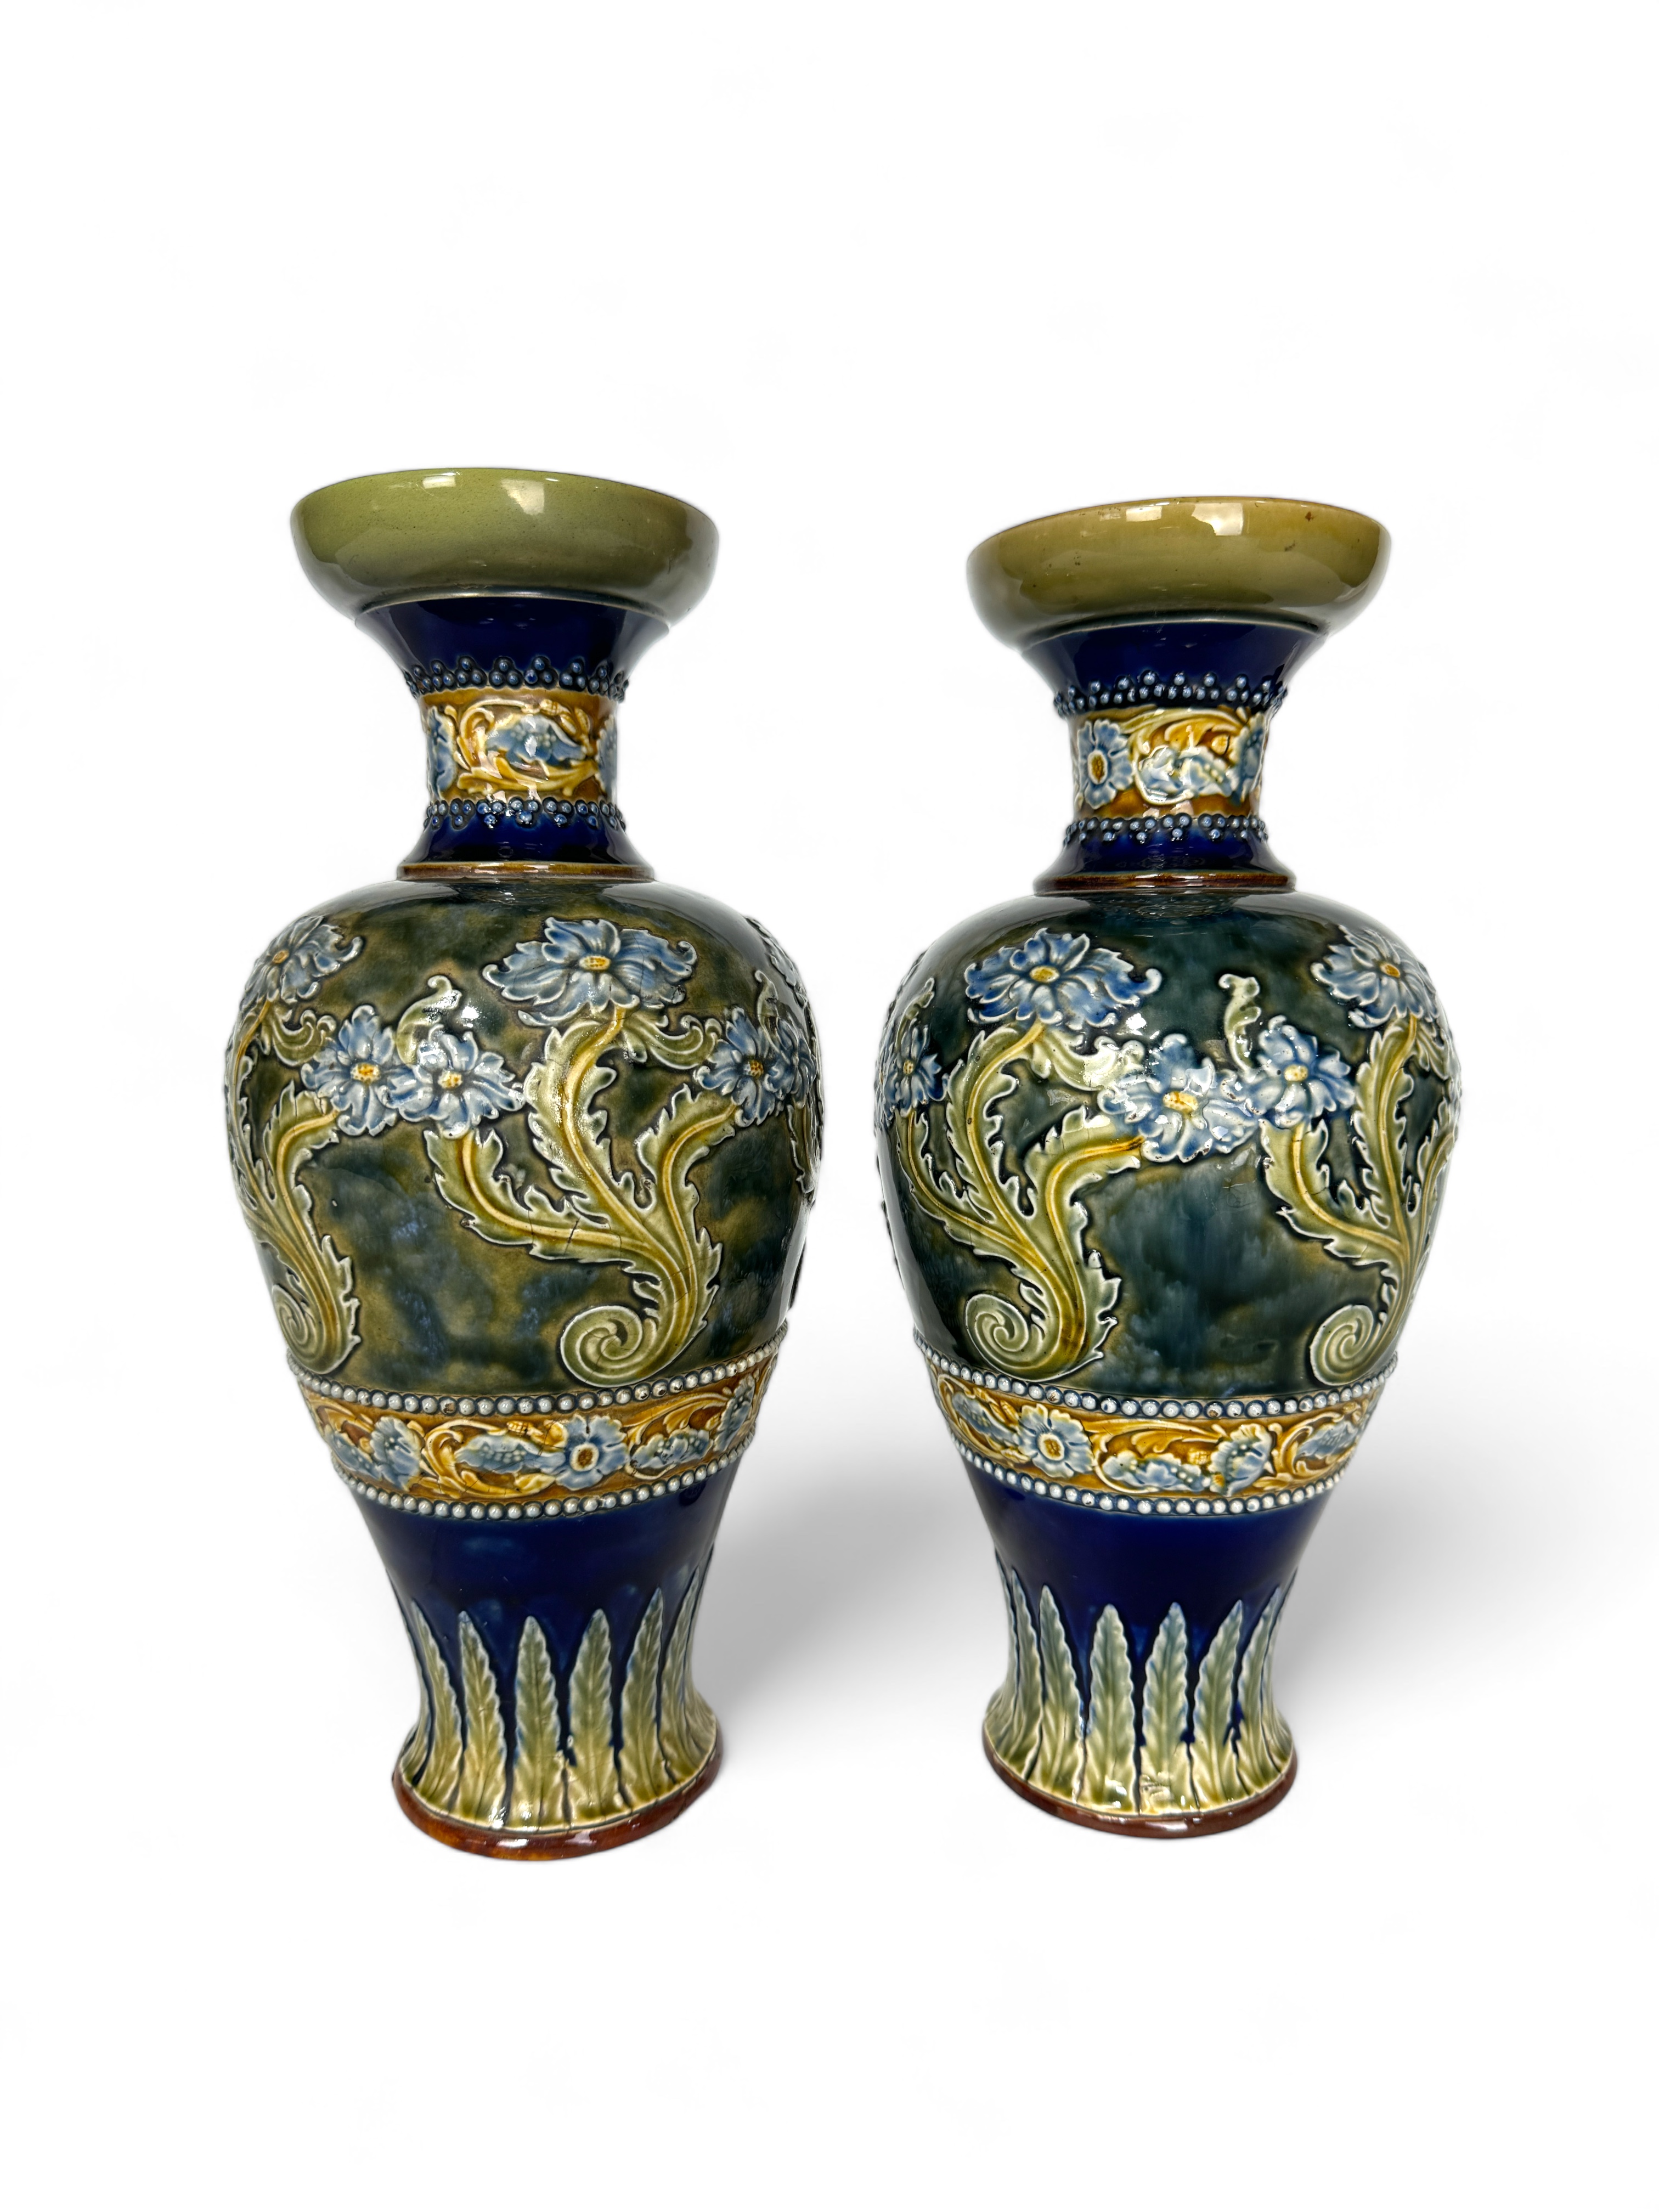 A pair of Royal Doulton Art Nouveau baluster vases, circa 1900